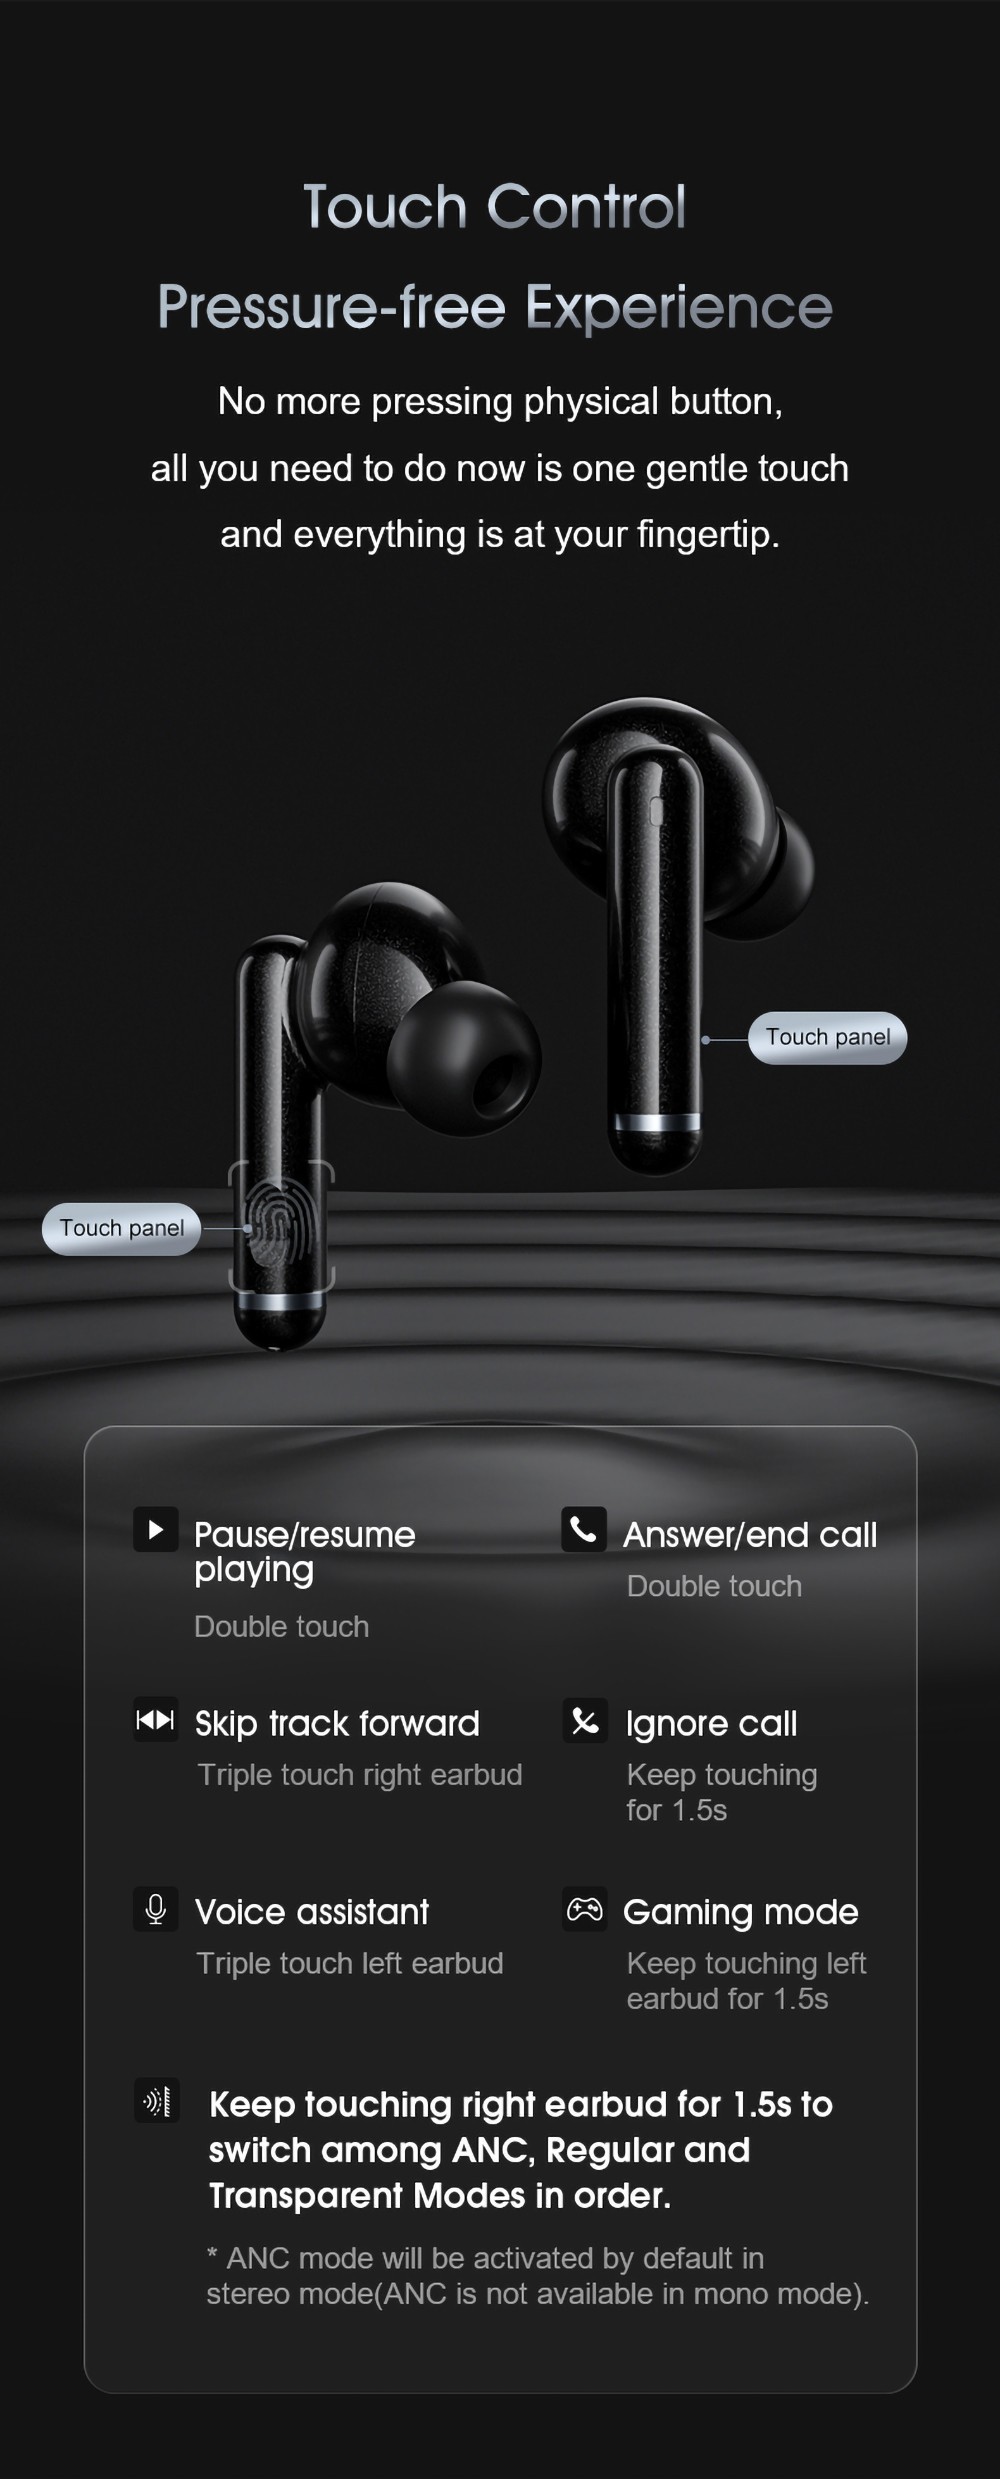 QCY HT03 Bluetooth 5.1 TWS Ενεργά ασύρματα ακουστικά ακύρωσης θορύβου